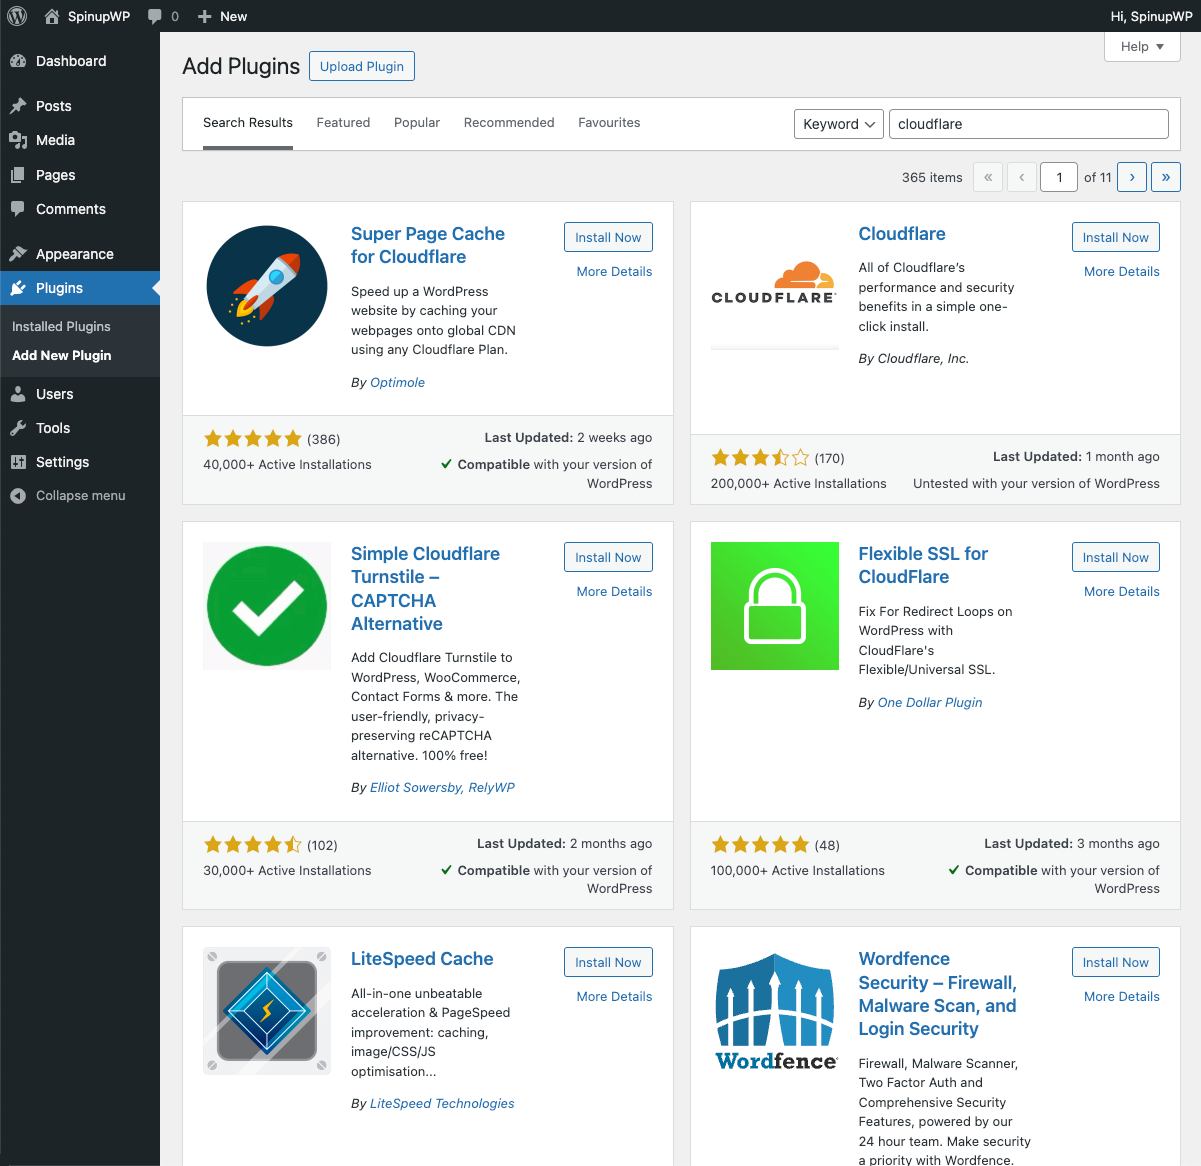 Screenshot of installing the WordPress plugin in the Cloudflare setup process